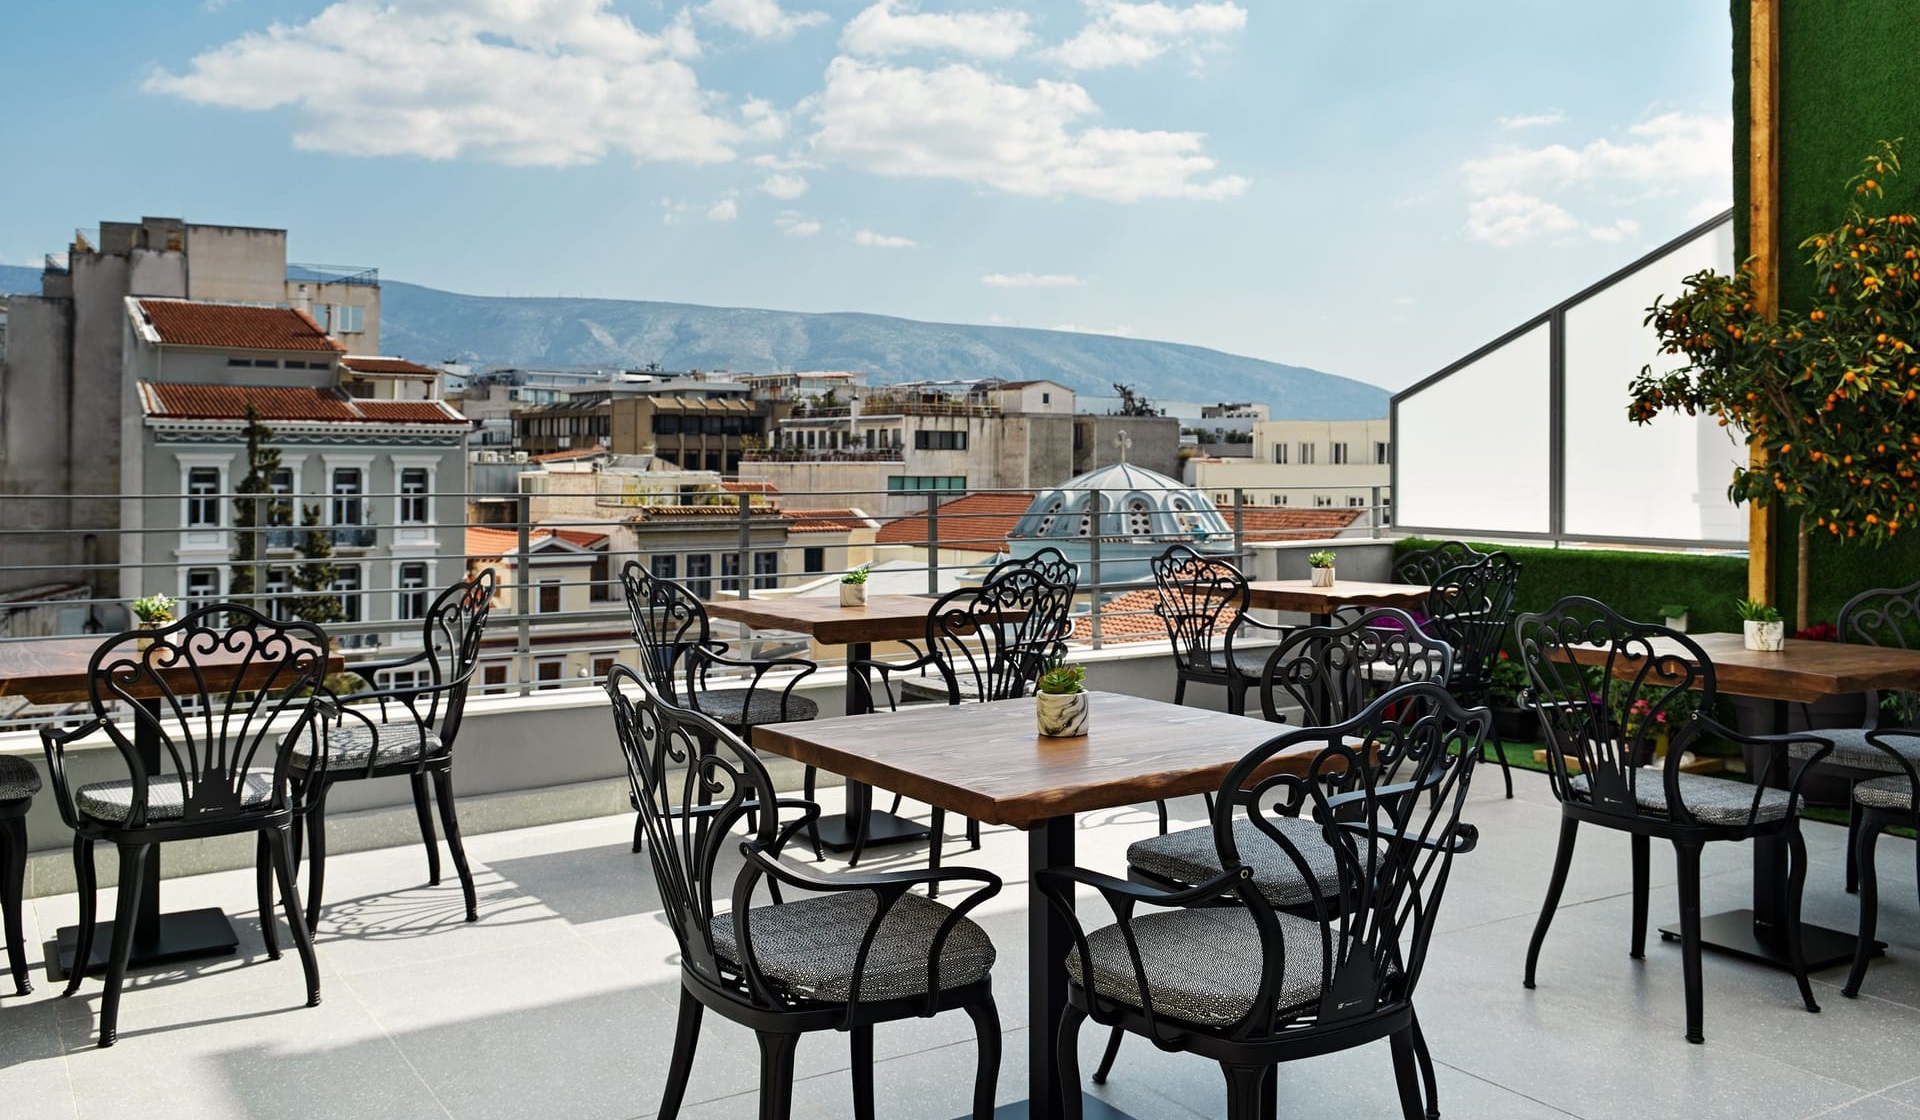 Athens City View Urban Suites - Αθήνα ✦ 2 Ημέρες (1 Διανυκτέρευση) ✦ 2 άτομα ✦ 1 ✦ έως 30/09/2022 ✦ Στην καρδιά της Αθήνας!